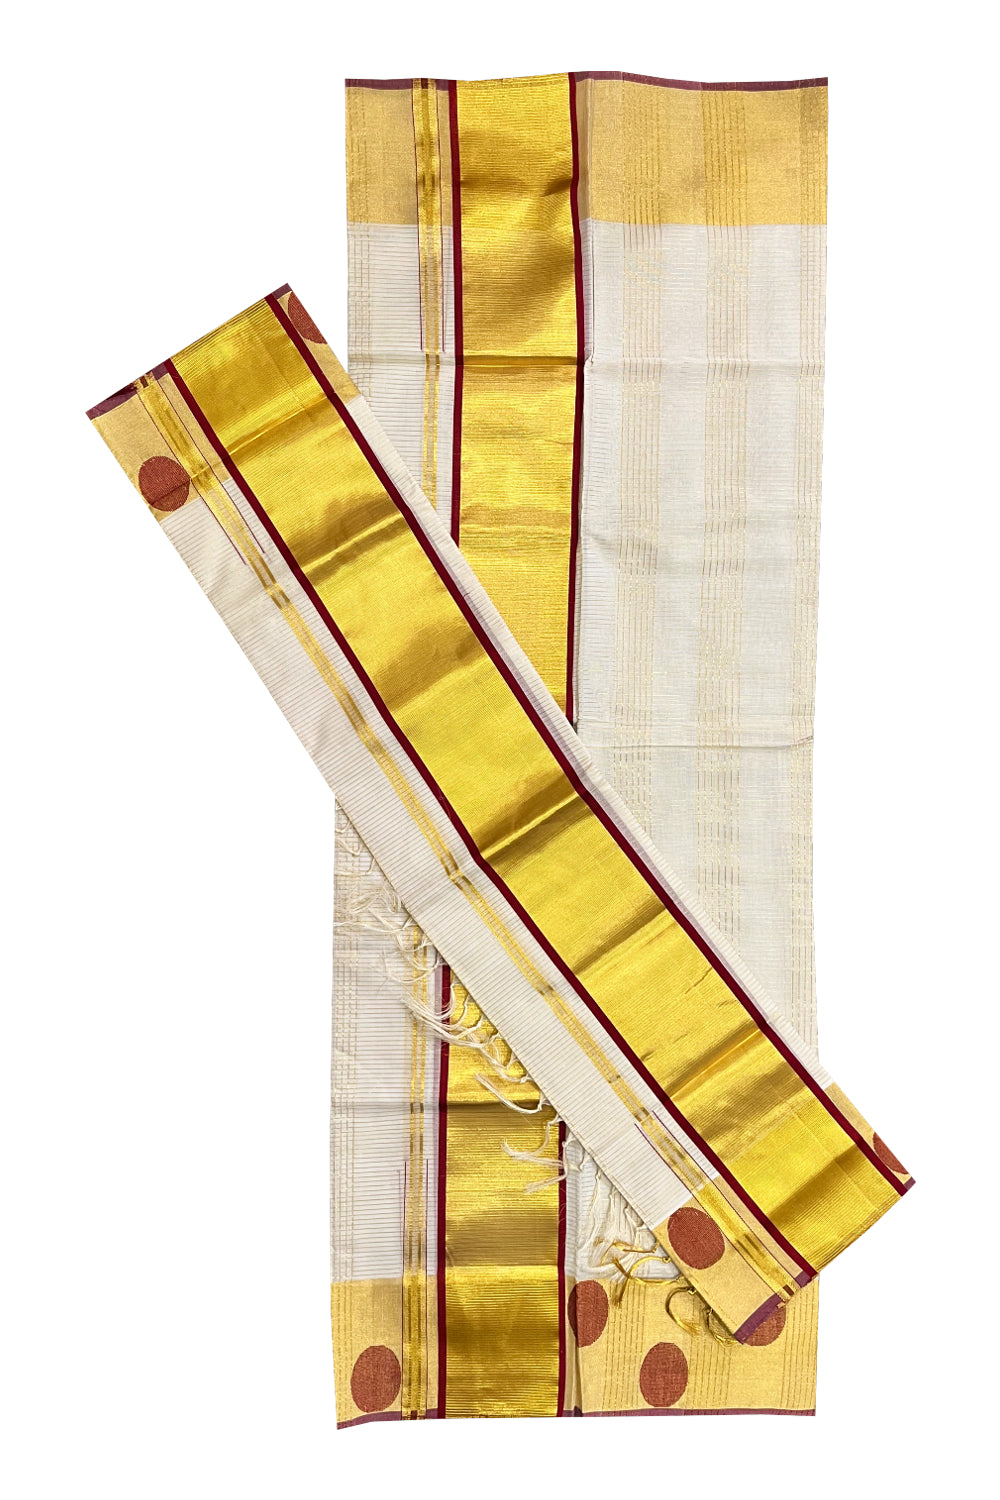 Southloom Handloom Premium Cotton Kasavu Striped Set Mundu With Red Polka Woven Patterns (Mundum Neriyathum) 2.70 Mtrs